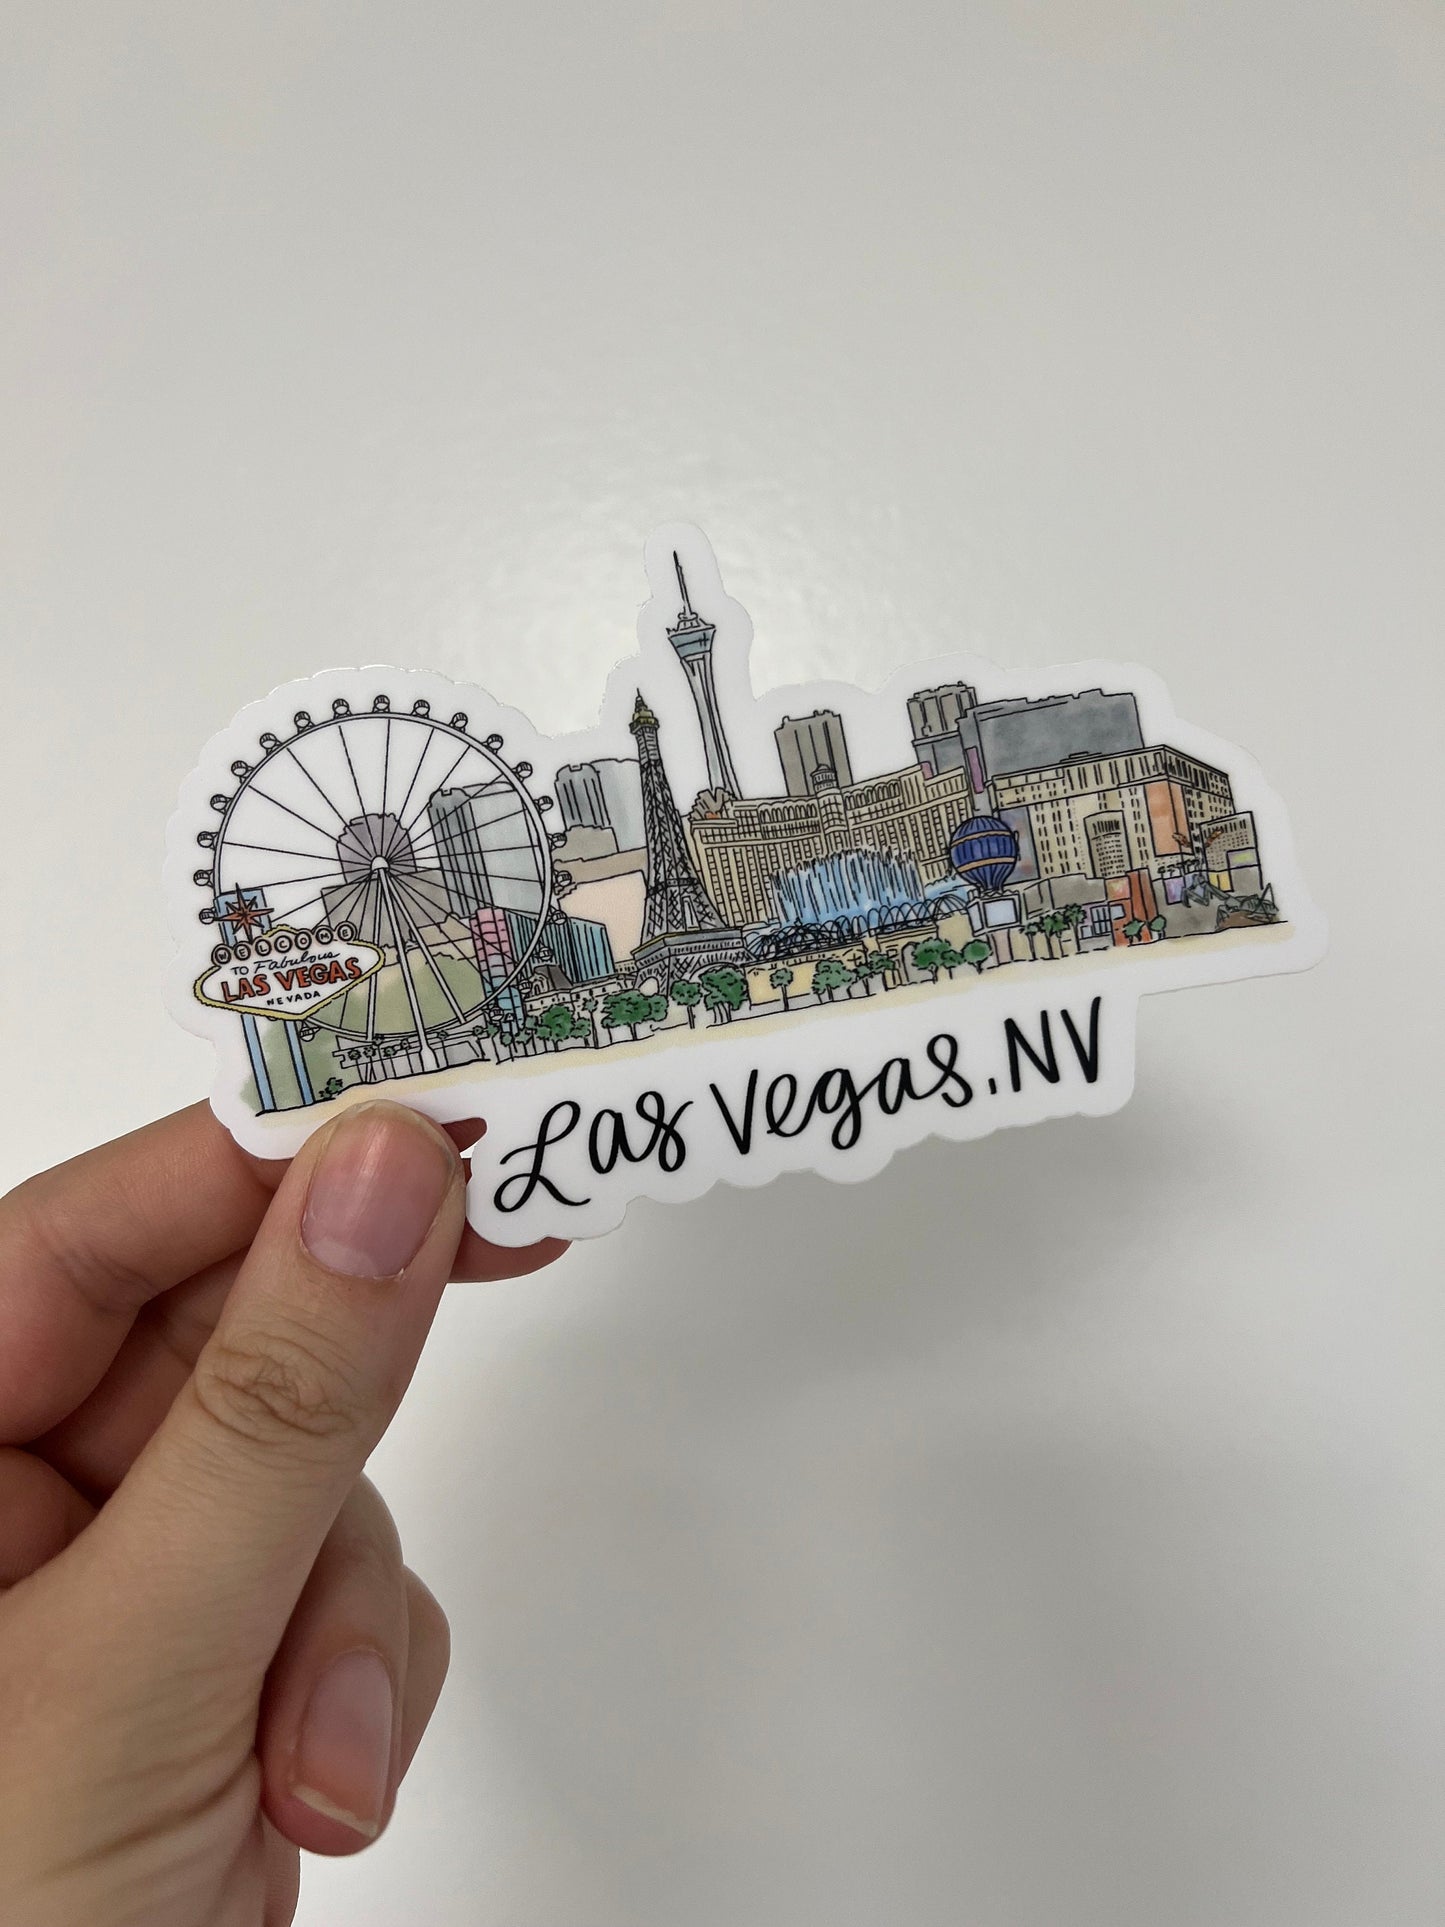 Las Vegas, NV (Nevada) Skyline sticker - Travel Sticker - Bachelorette Party Gift - Wedding Gift